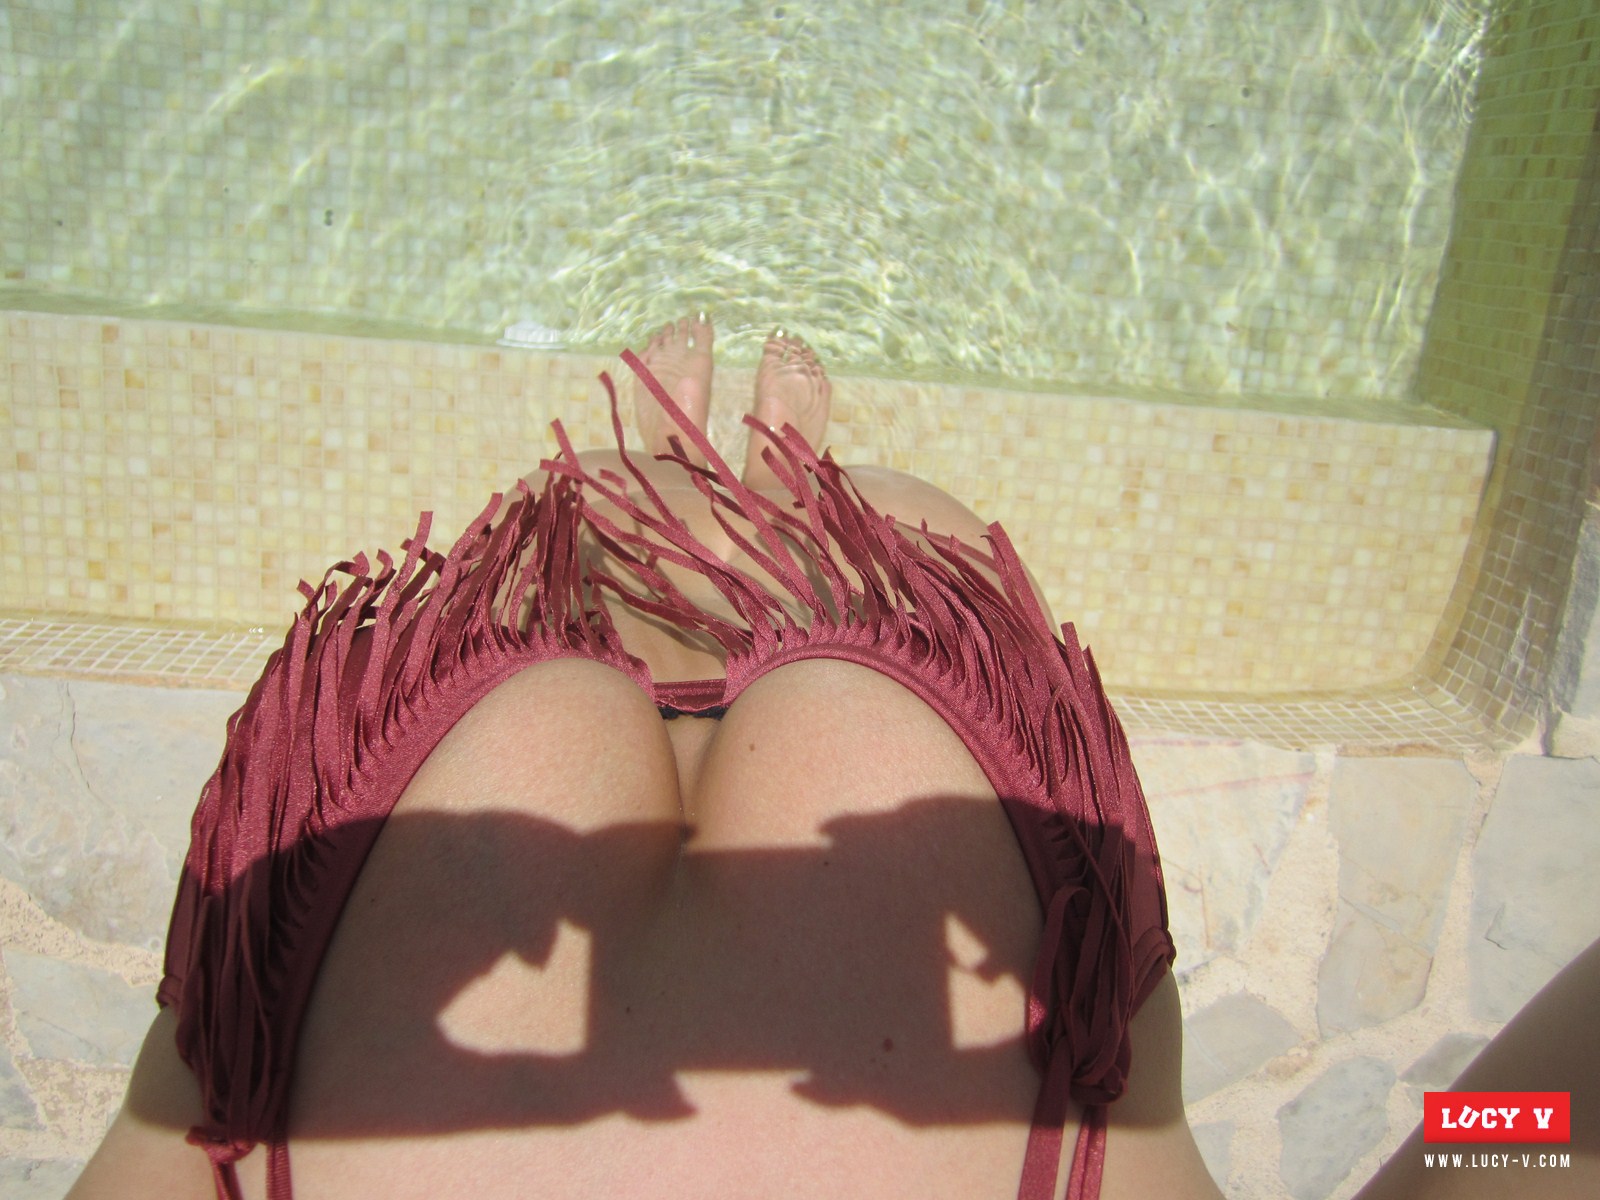 Lucy Vixen, redhead, strip, topless, busty, self, pool